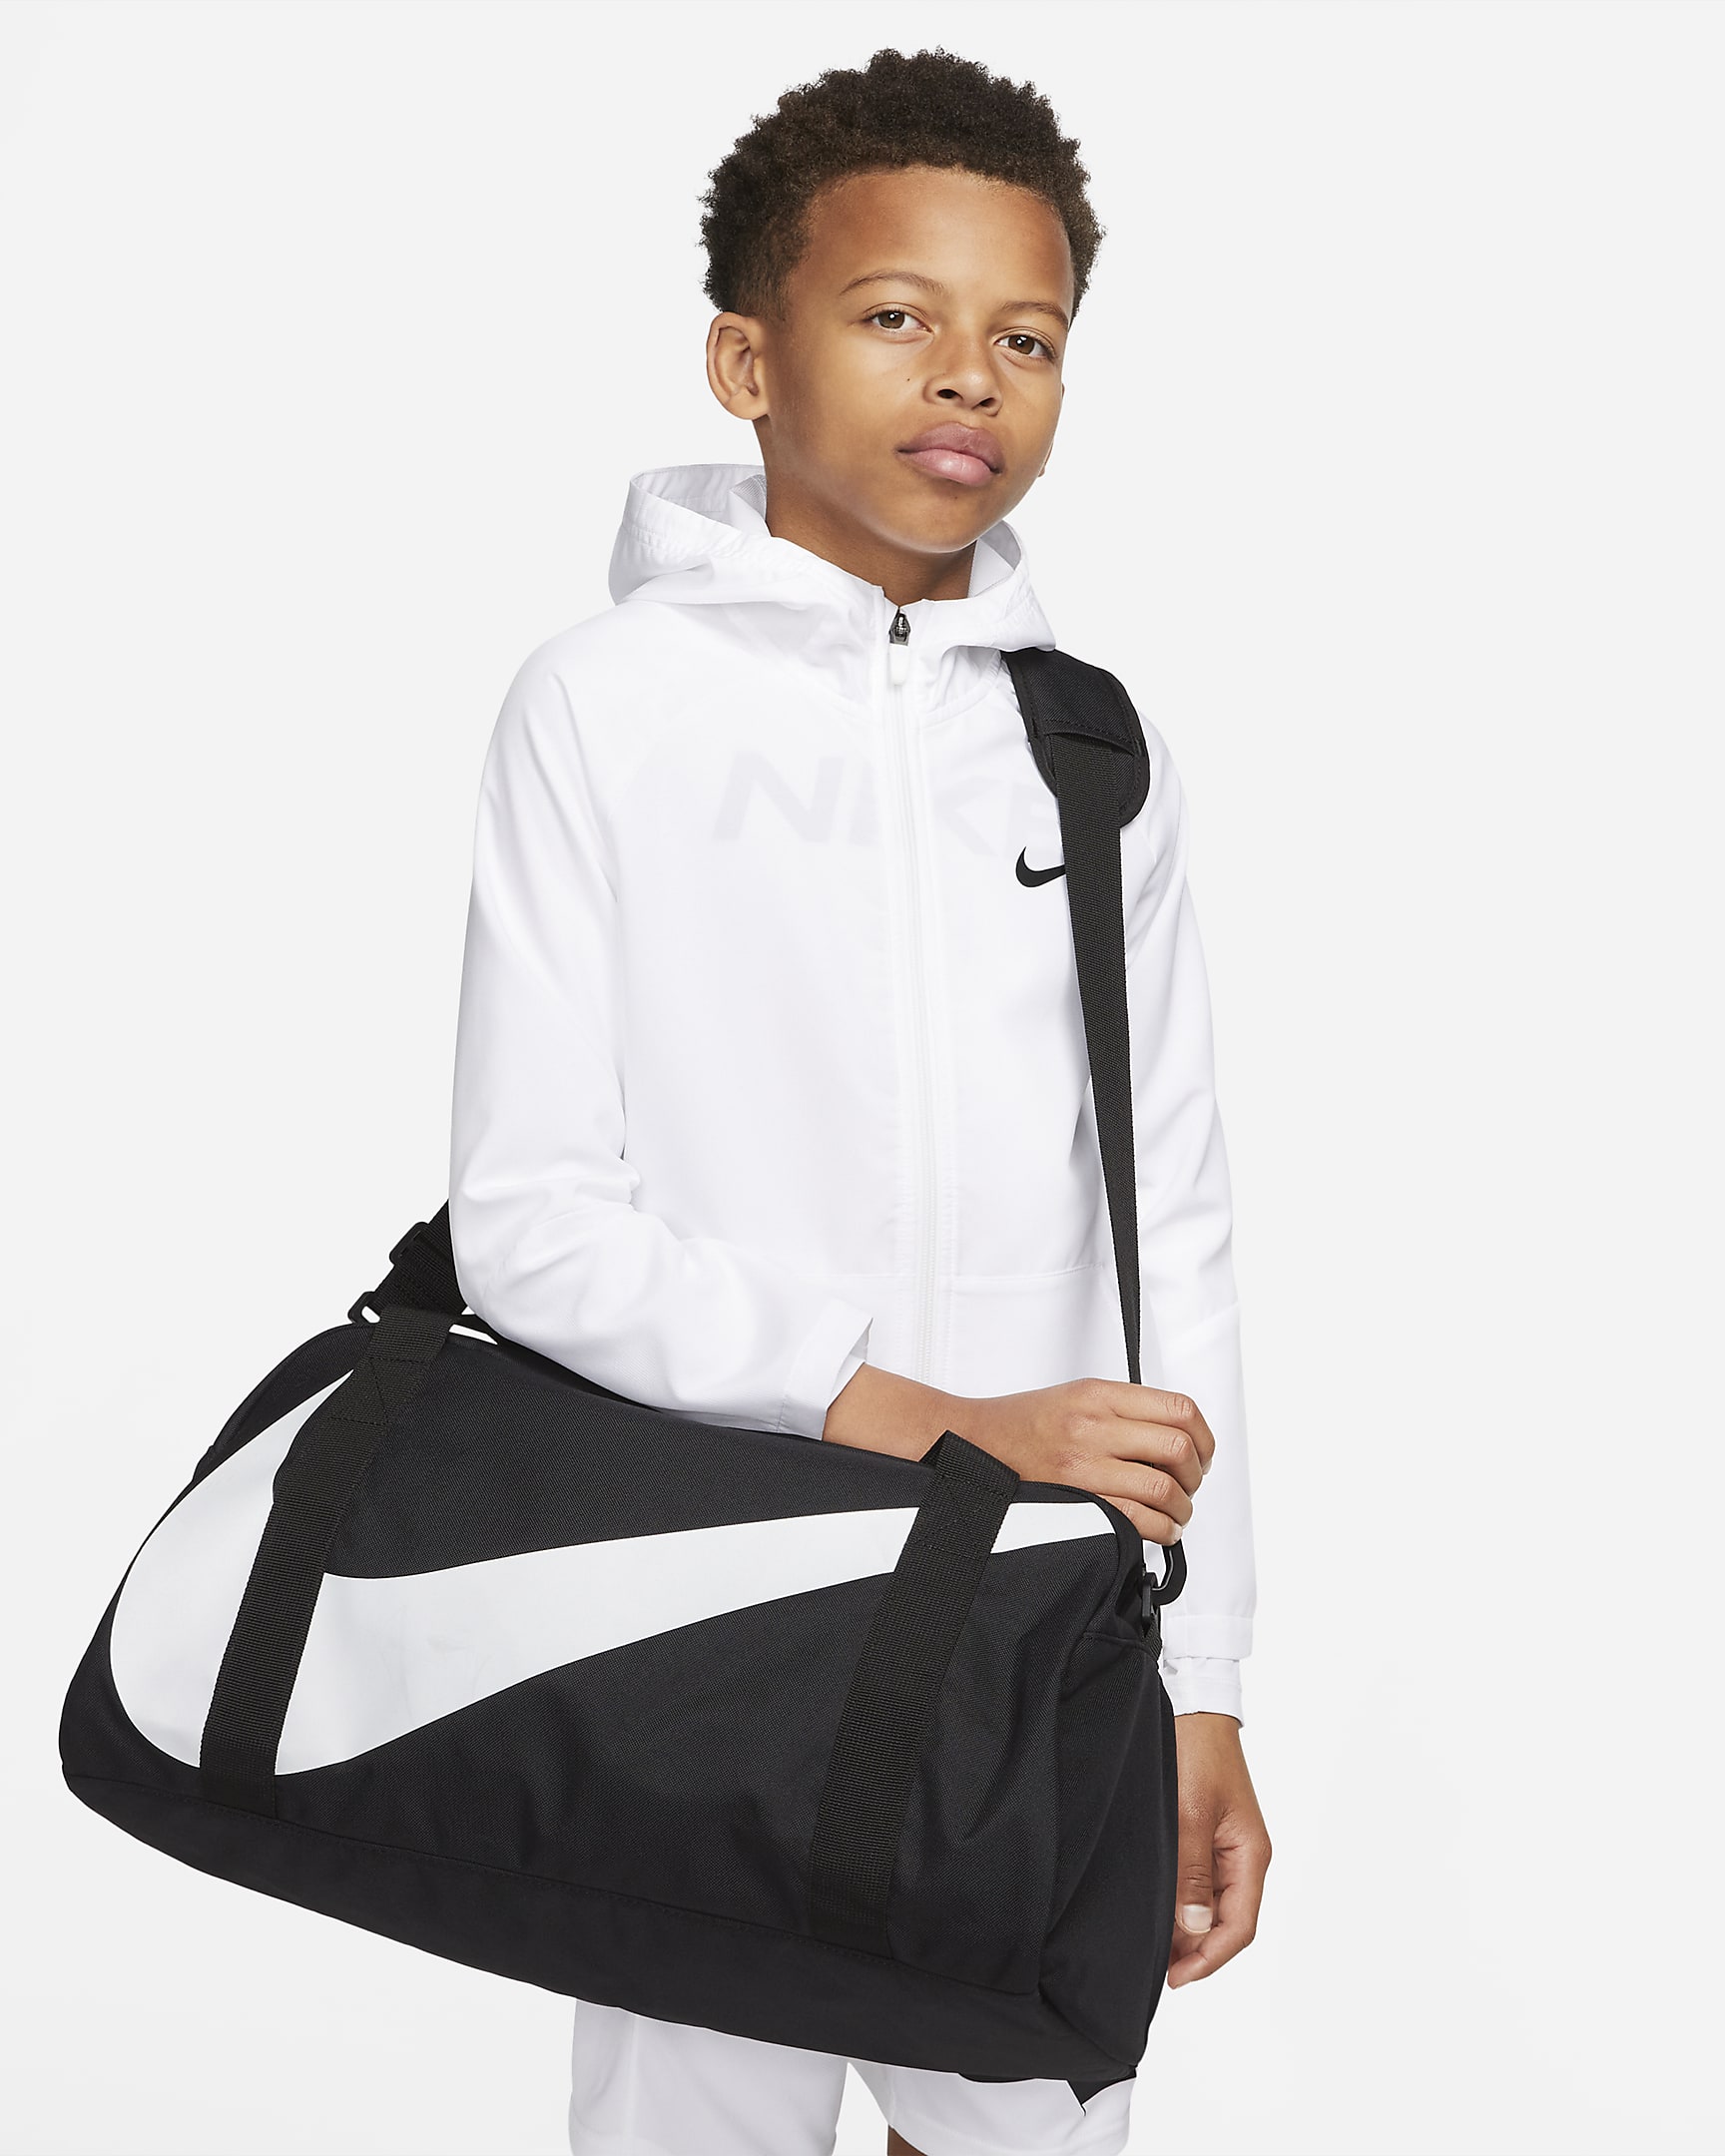 Väska Nike Gym Club för barn (25 l) - Svart/Svart/Vit